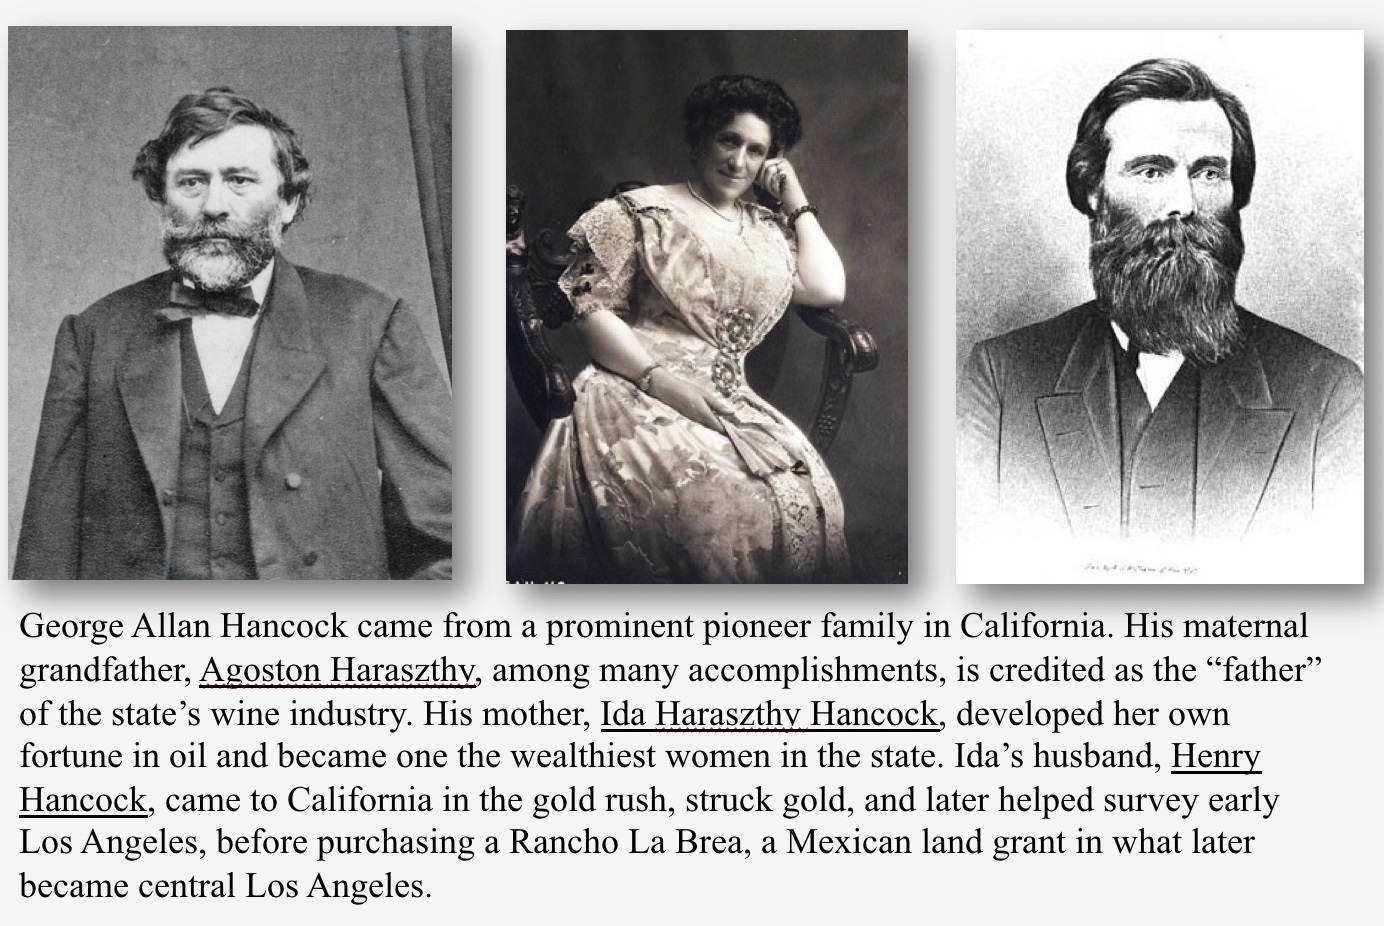 Photos of Allan Hancock's grandfather and parents